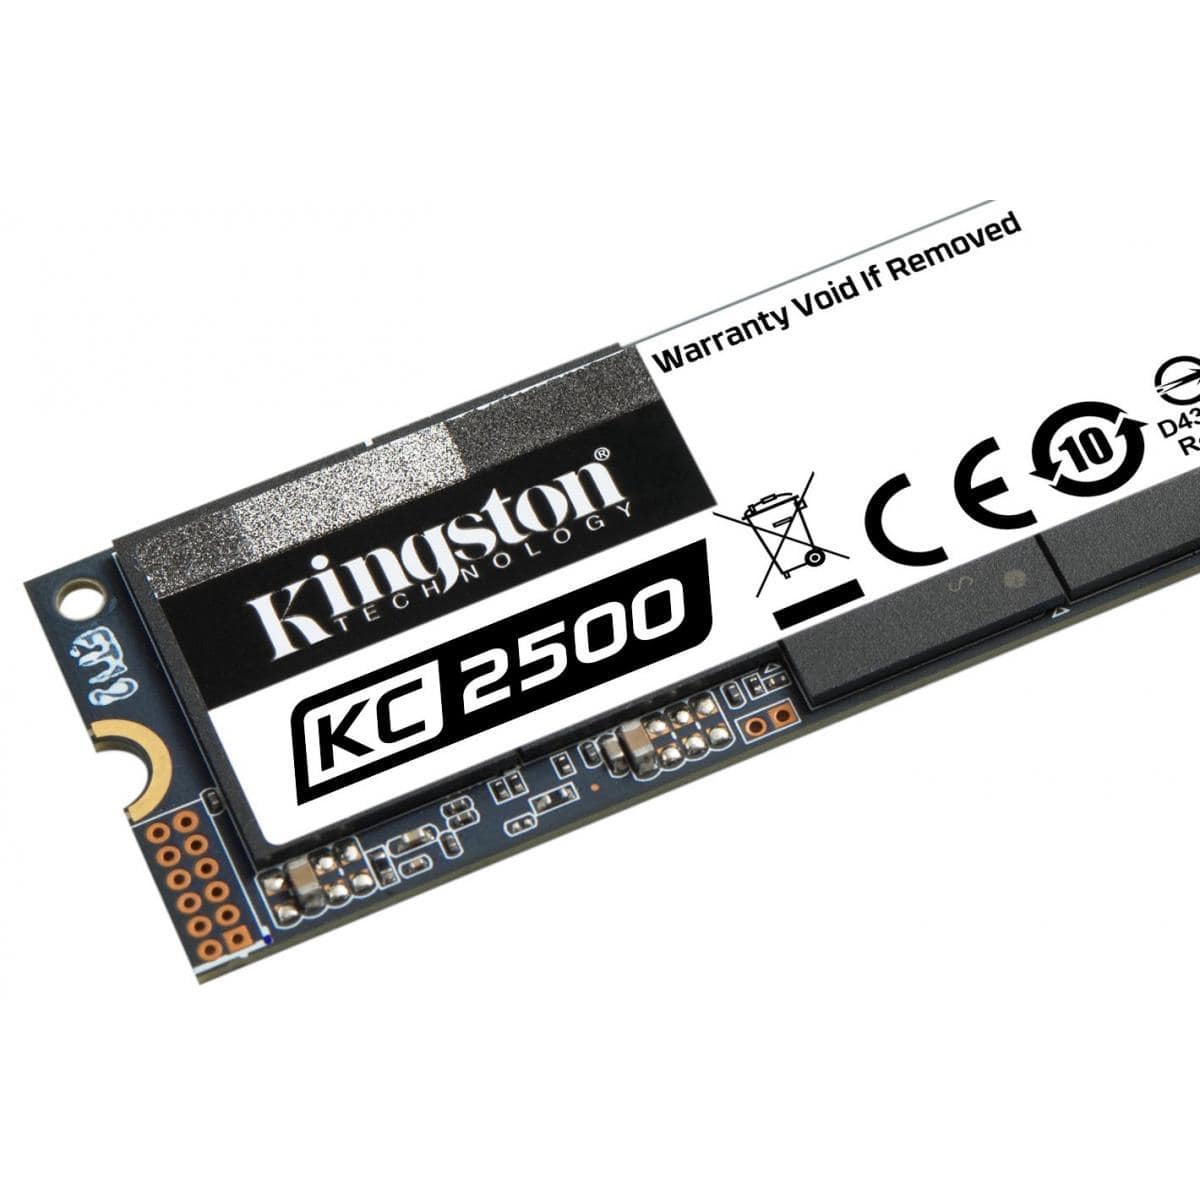 KINGSTON Solid State Drive Kingston KC2500 1TB M.2 Express PCIE NVMe™ Gen 3.0 x 4 Lanes 3500MB/s read, 2,900MB/s write (45X Faster)